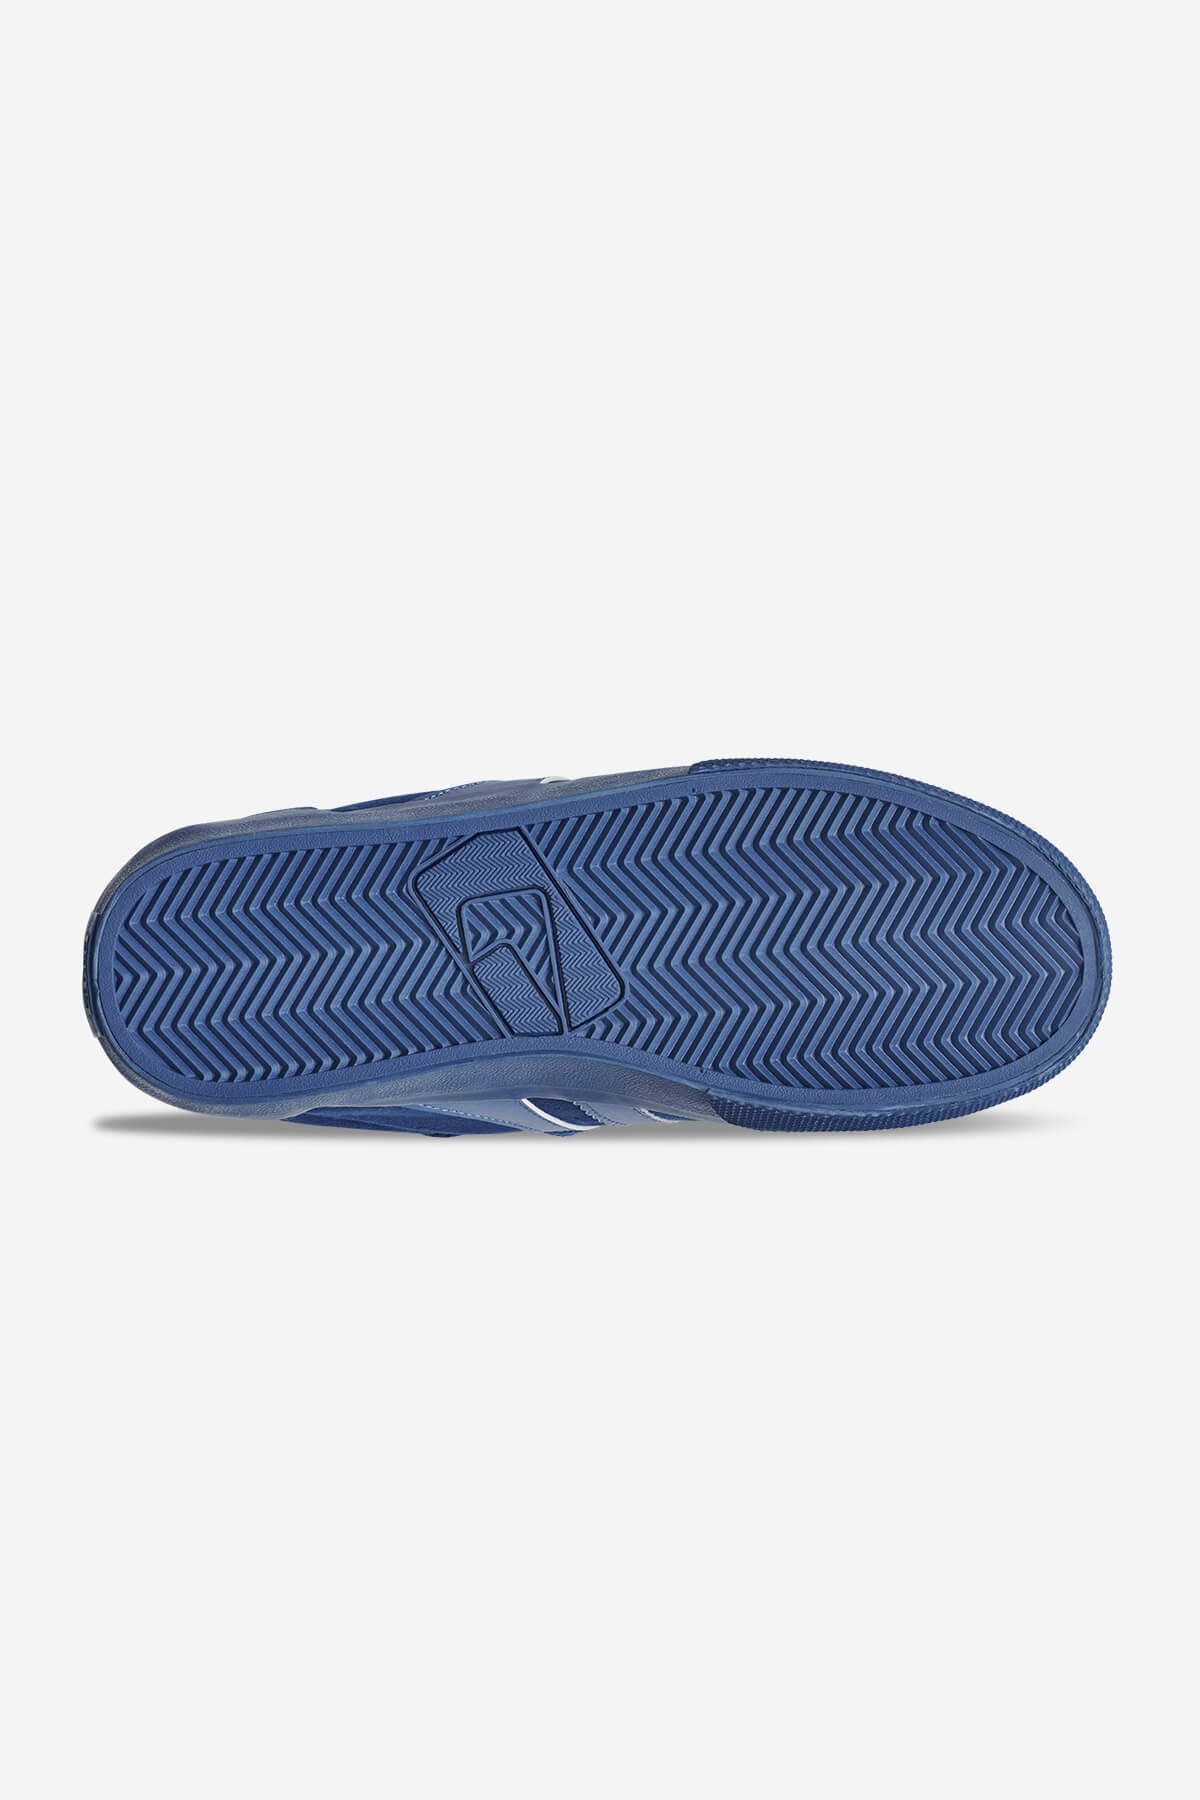 encore-2 blue gold  dip skateboard shoes